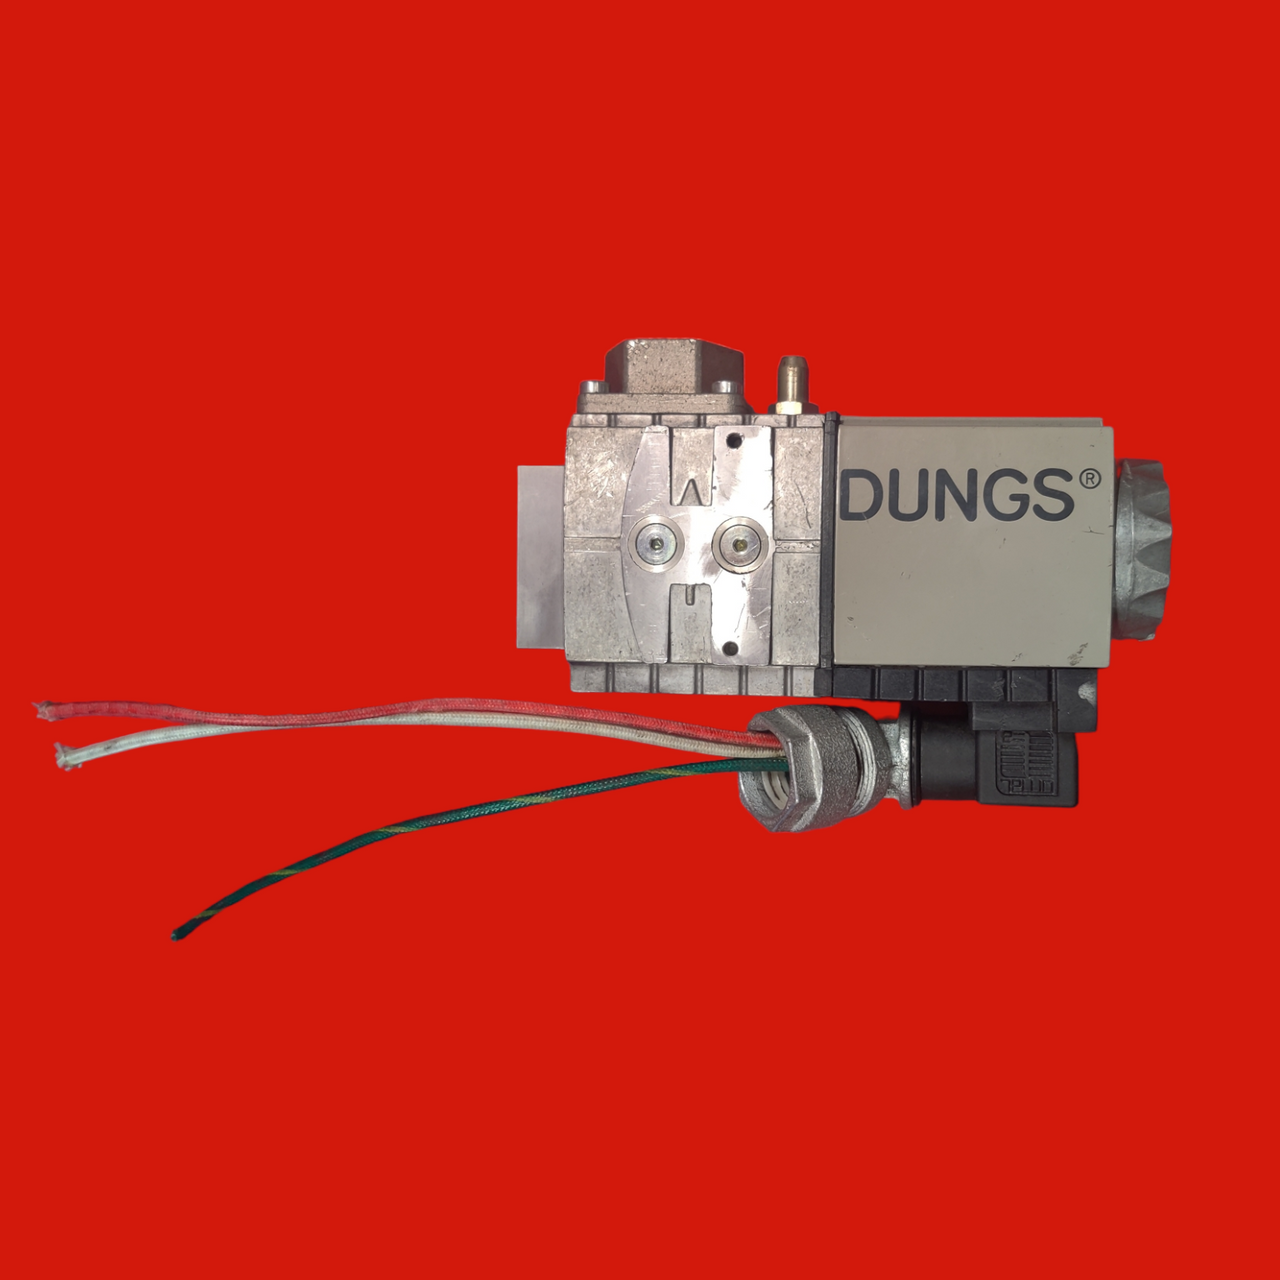 Dungs Single Solenoid Shutoff Valve Without Interlock Switch SV 1005/614, 267076